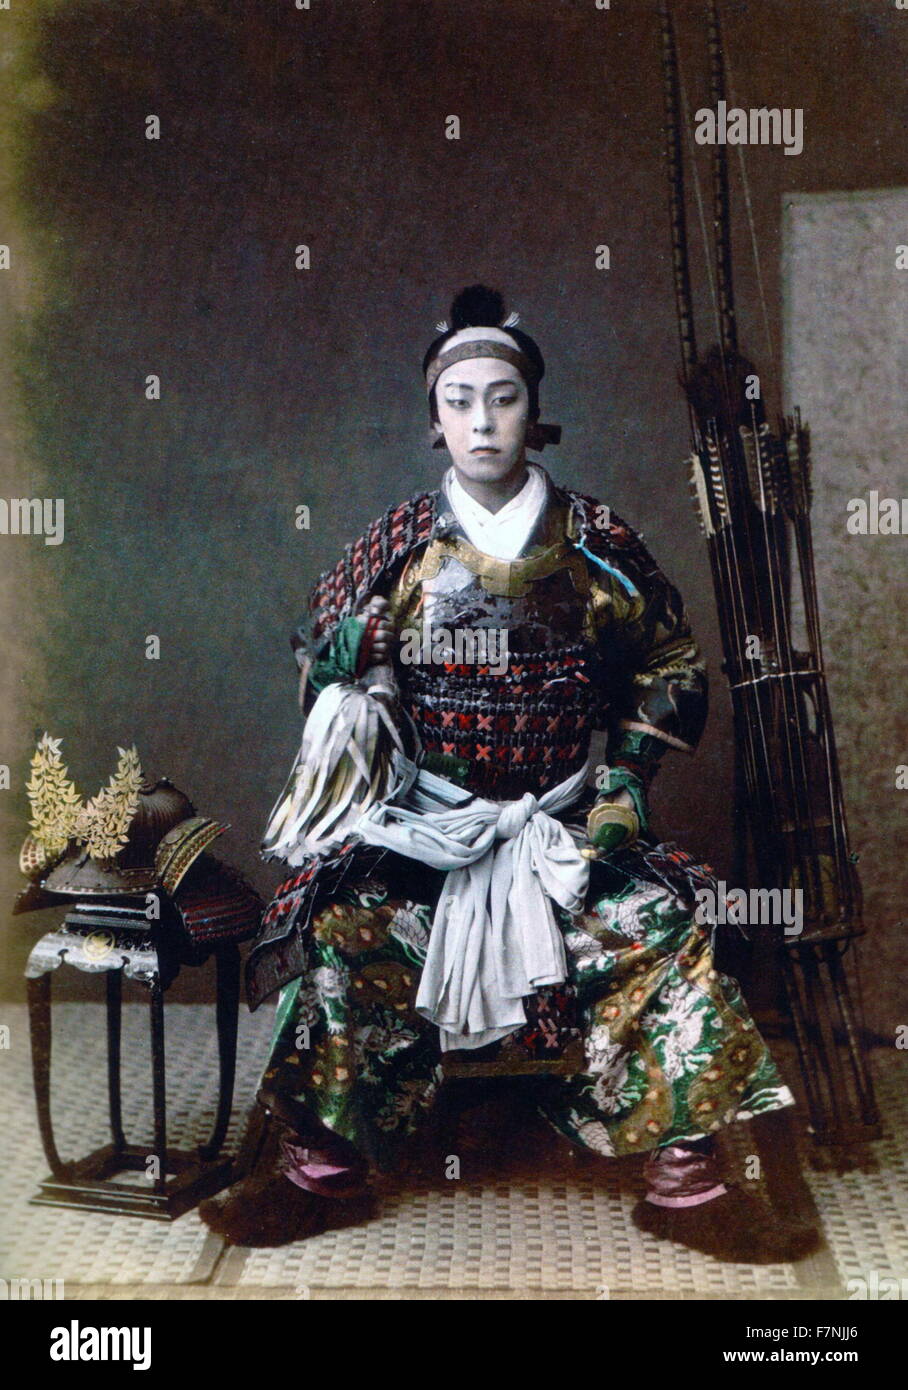 https://c8.alamy.com/comp/F7NJJ6/japanese-samurai-warrior-vintage-photograph-from-japan-1867-F7NJJ6.jpg